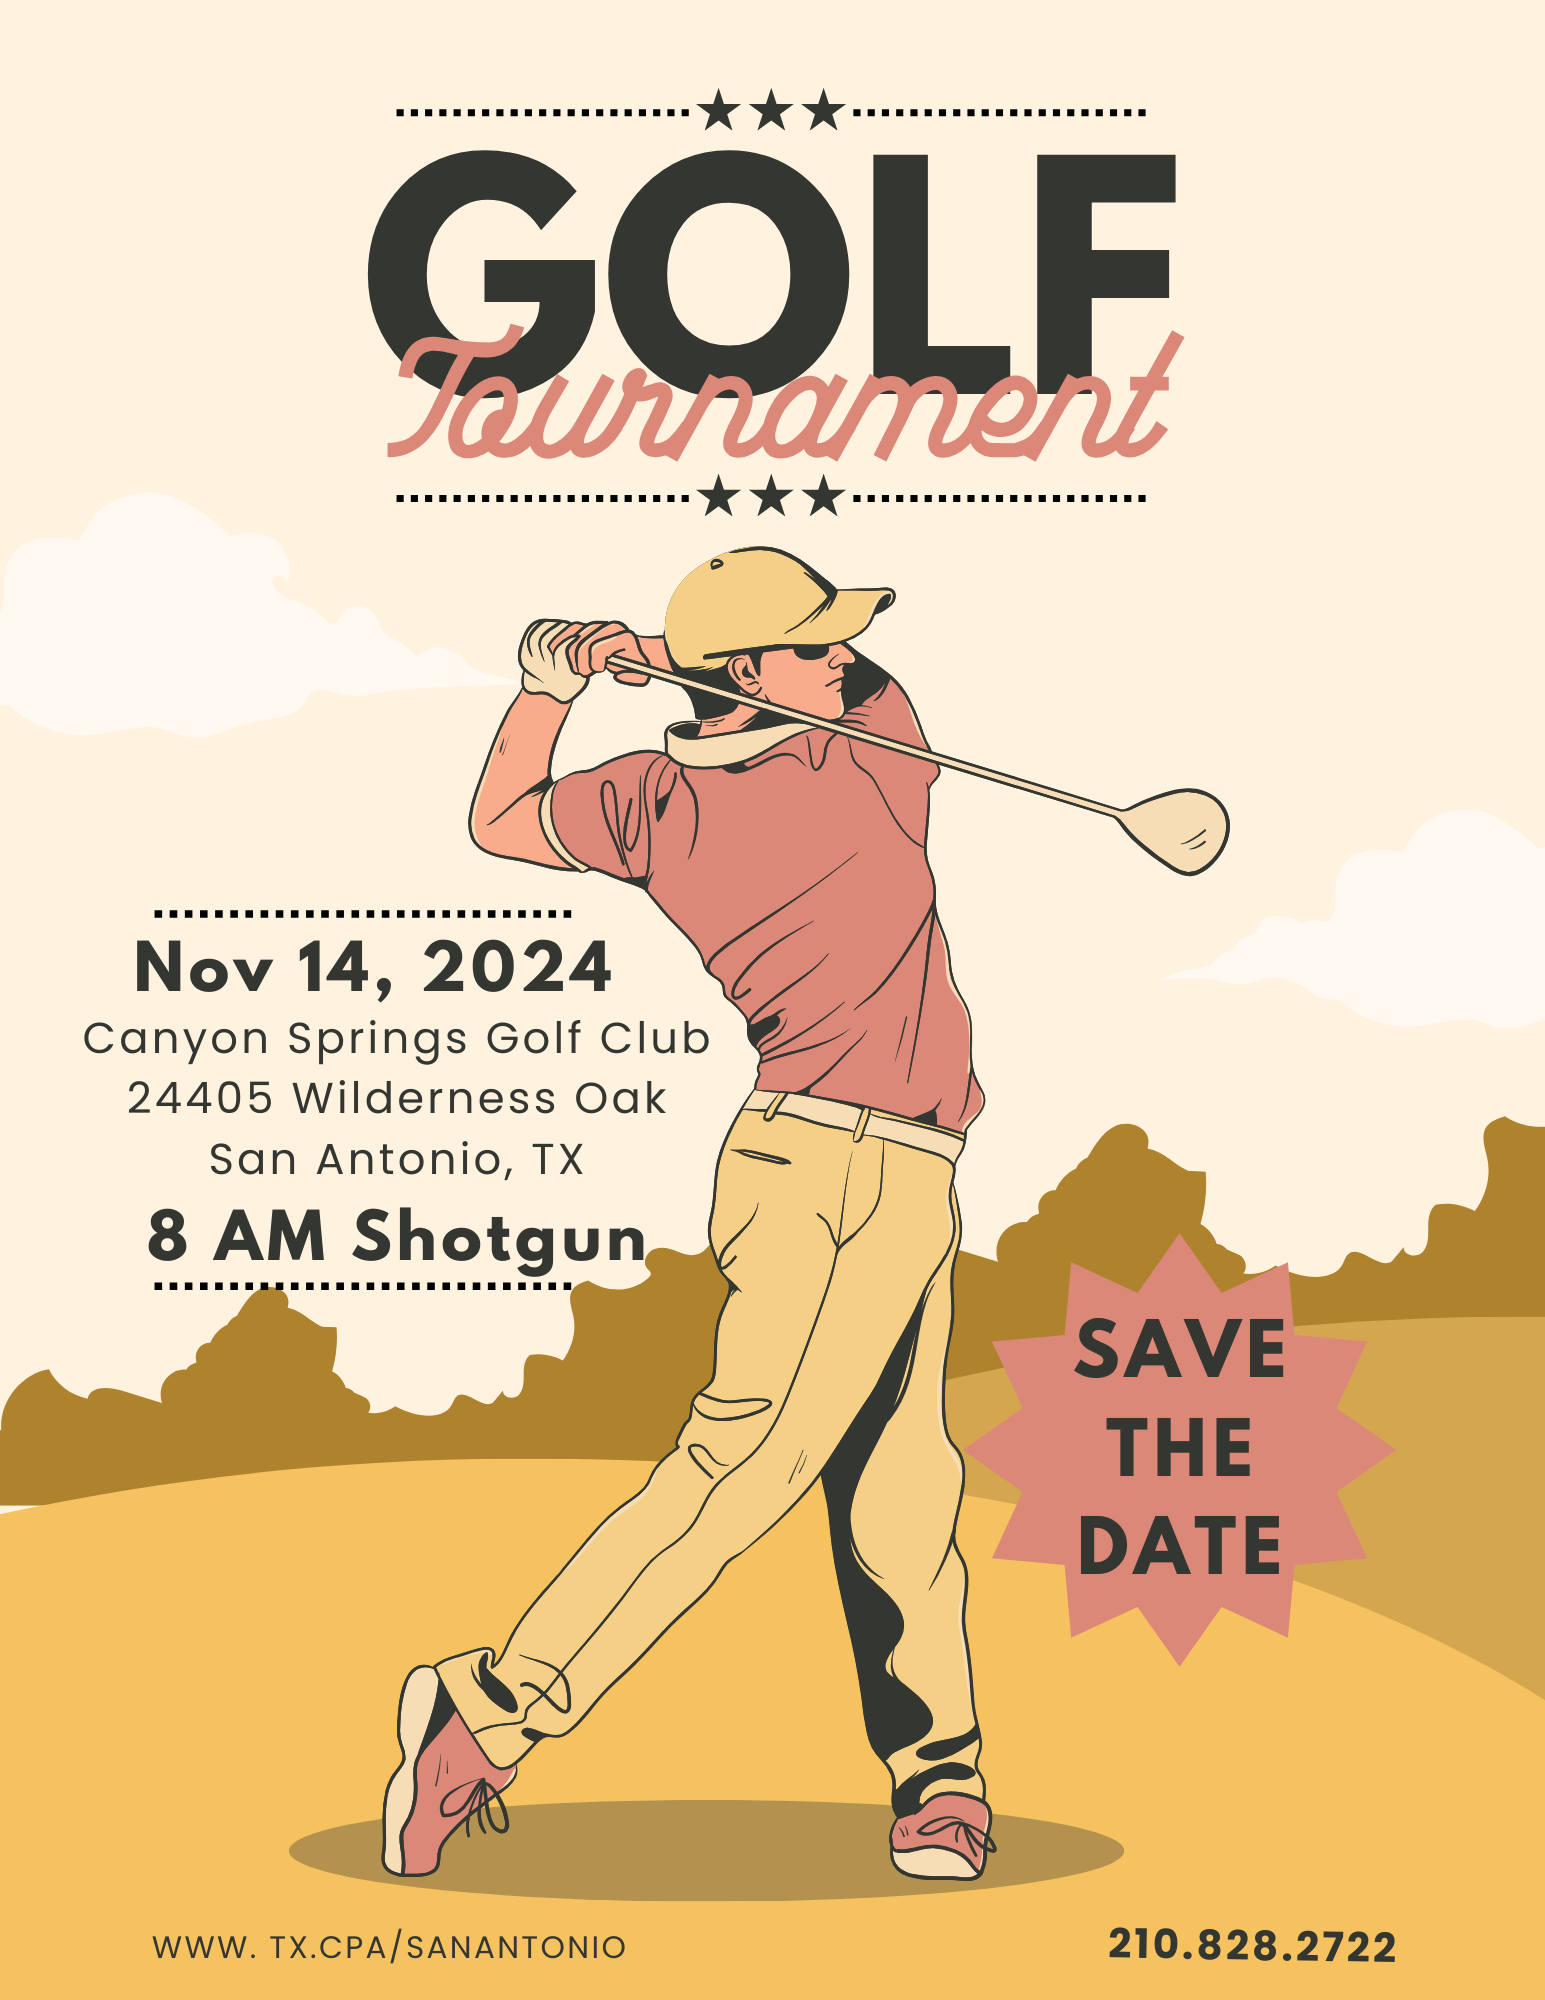 Golf Tournament Save the Date - November 14, 2024